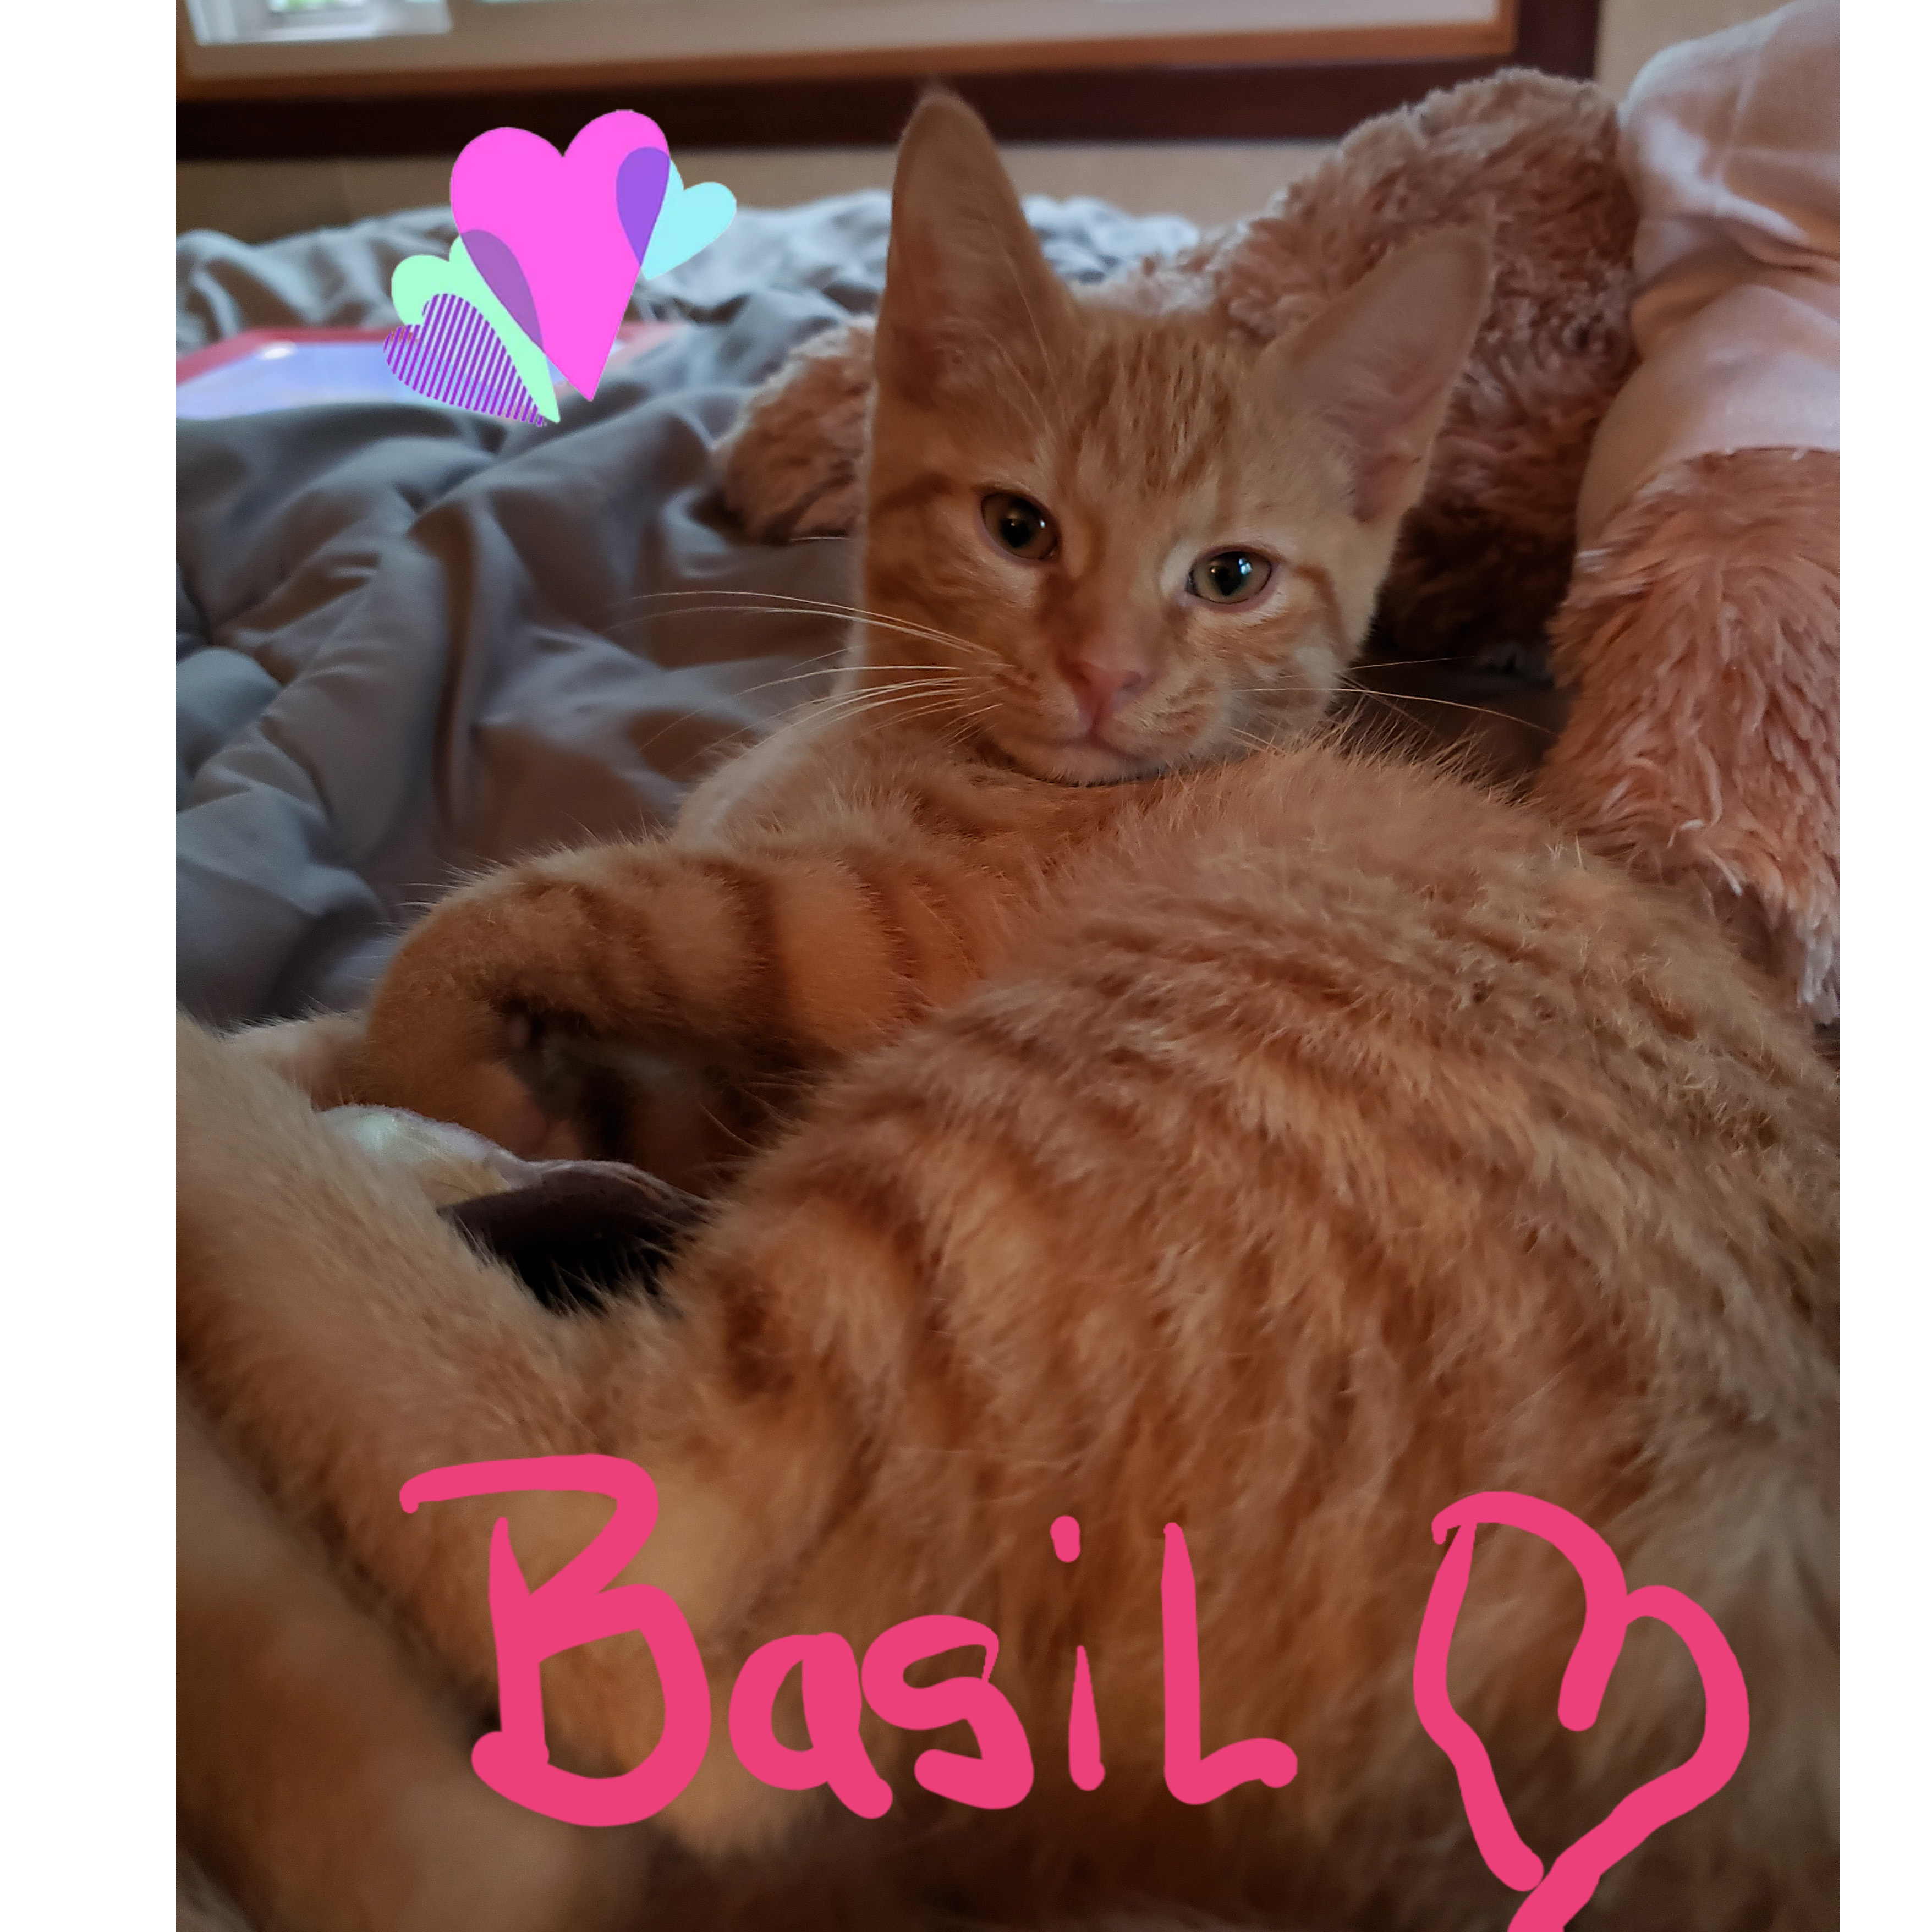 Basil detail page